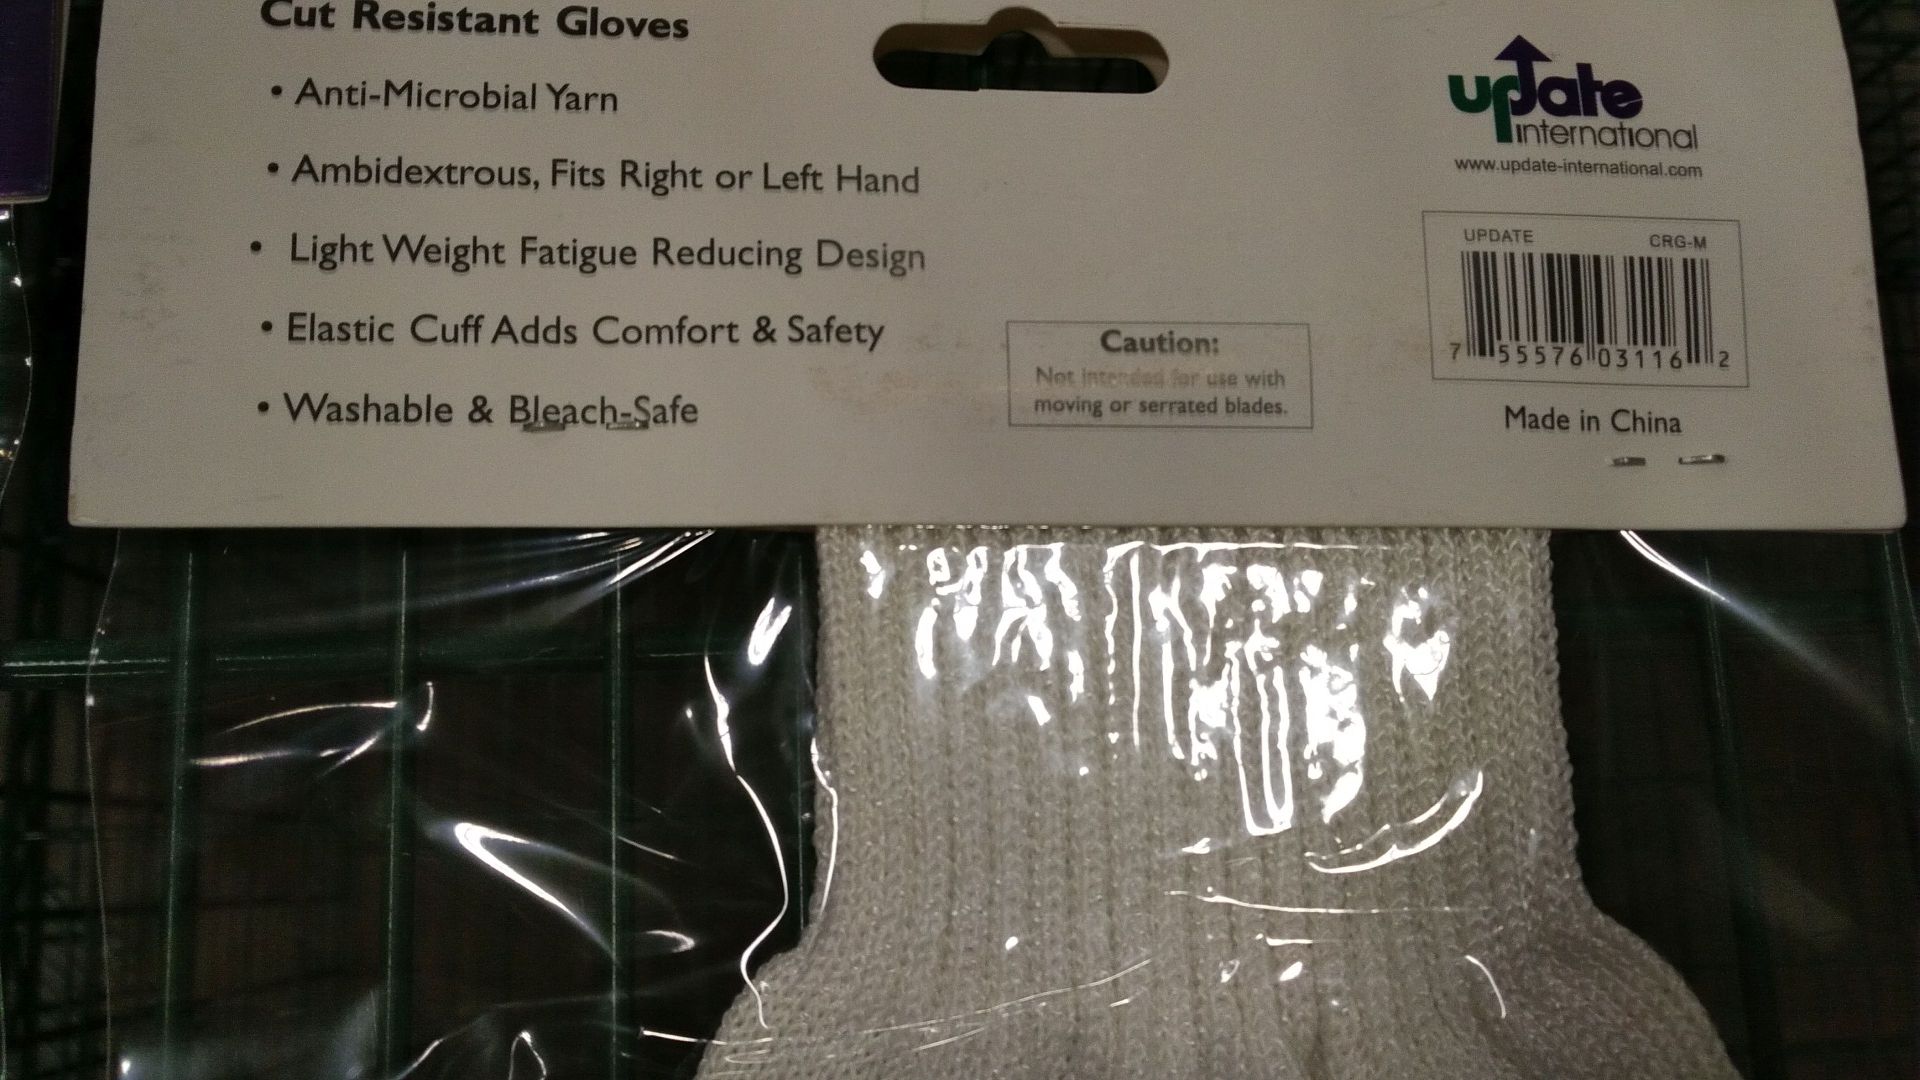 Medium (9.5") Cut-Resistant Gloves - Lot of 2 - Image 2 of 4